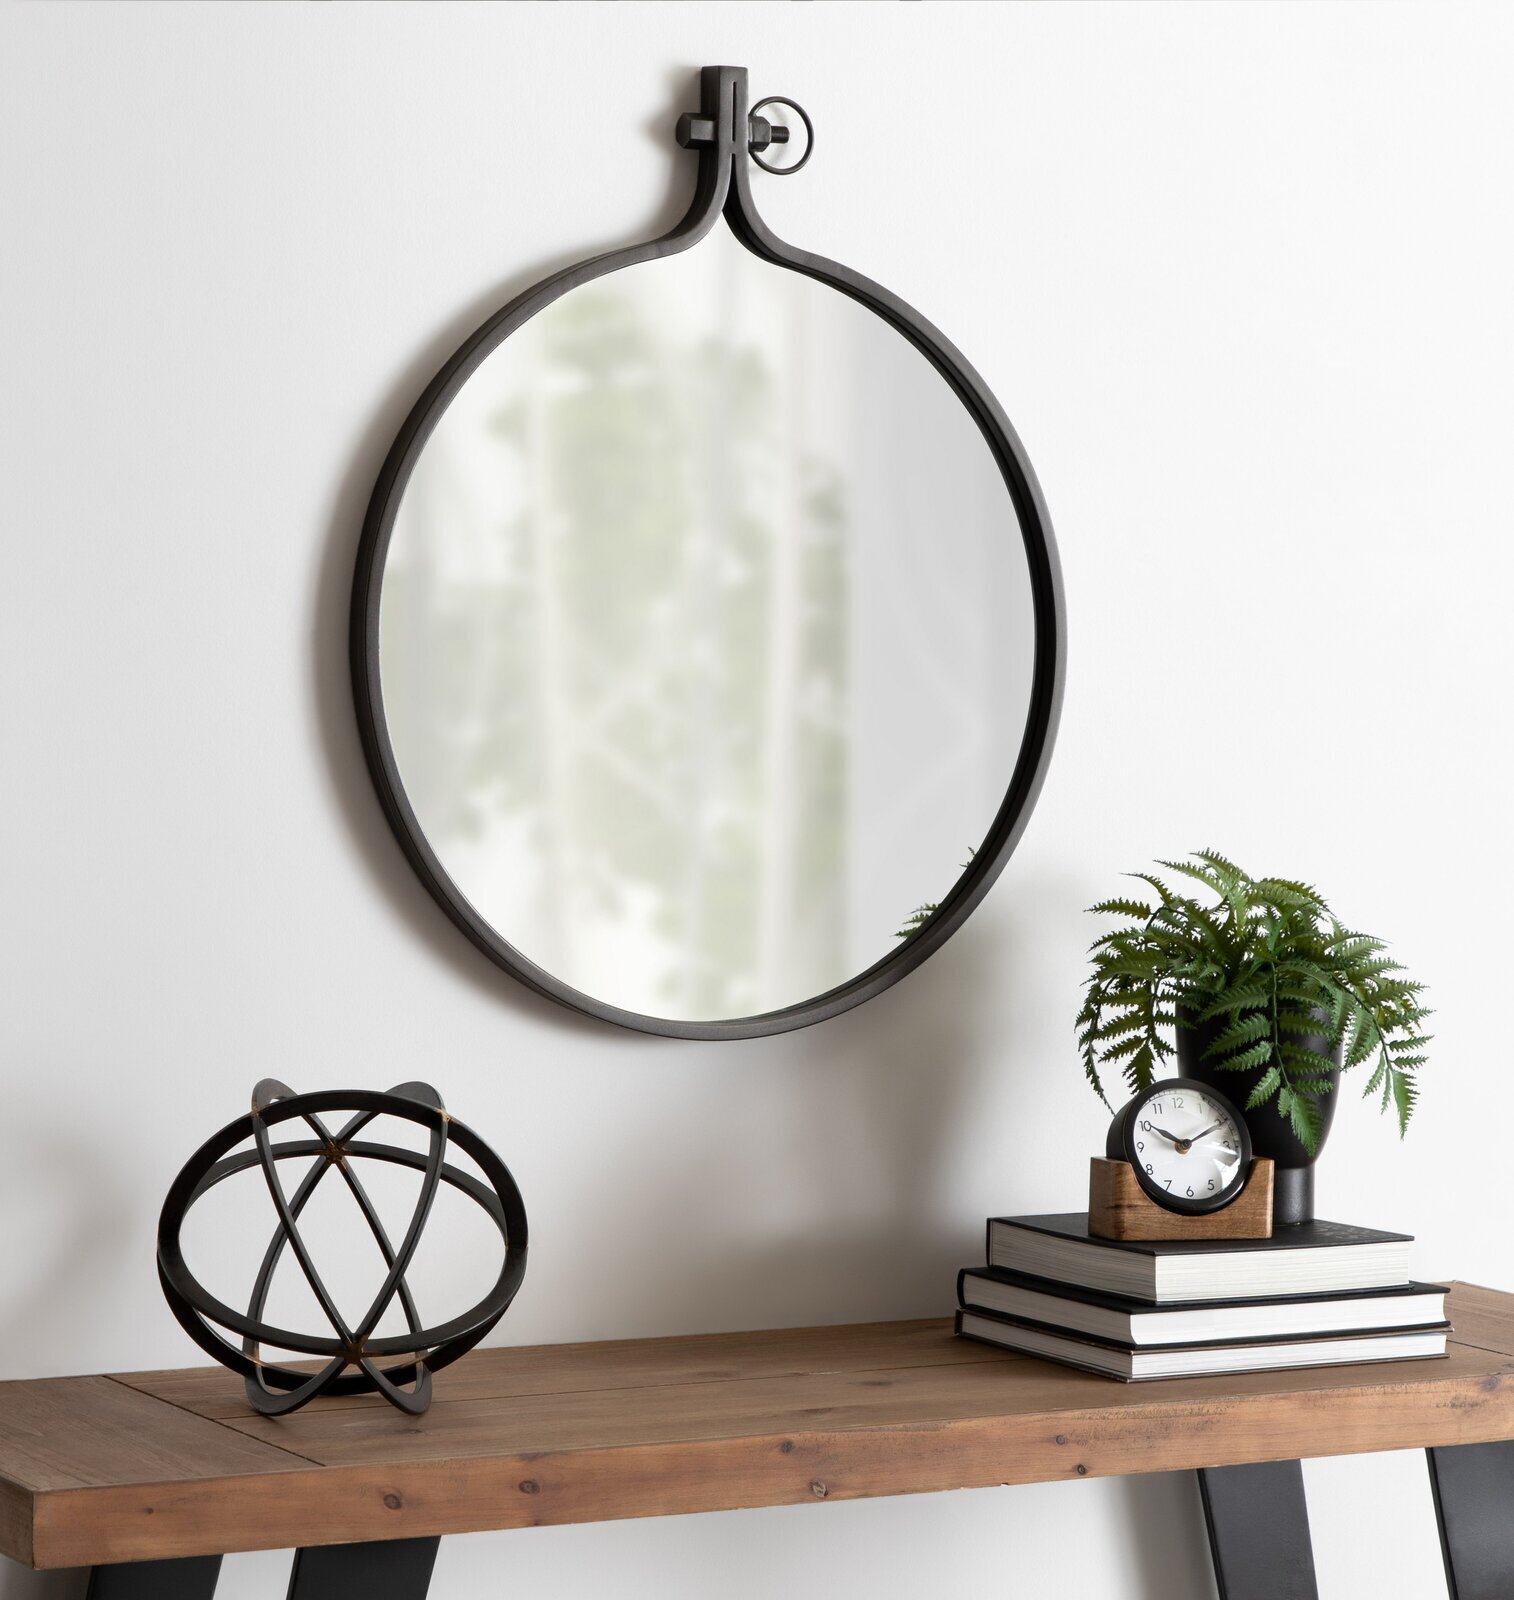 Eye catching & rustic round mirror frame